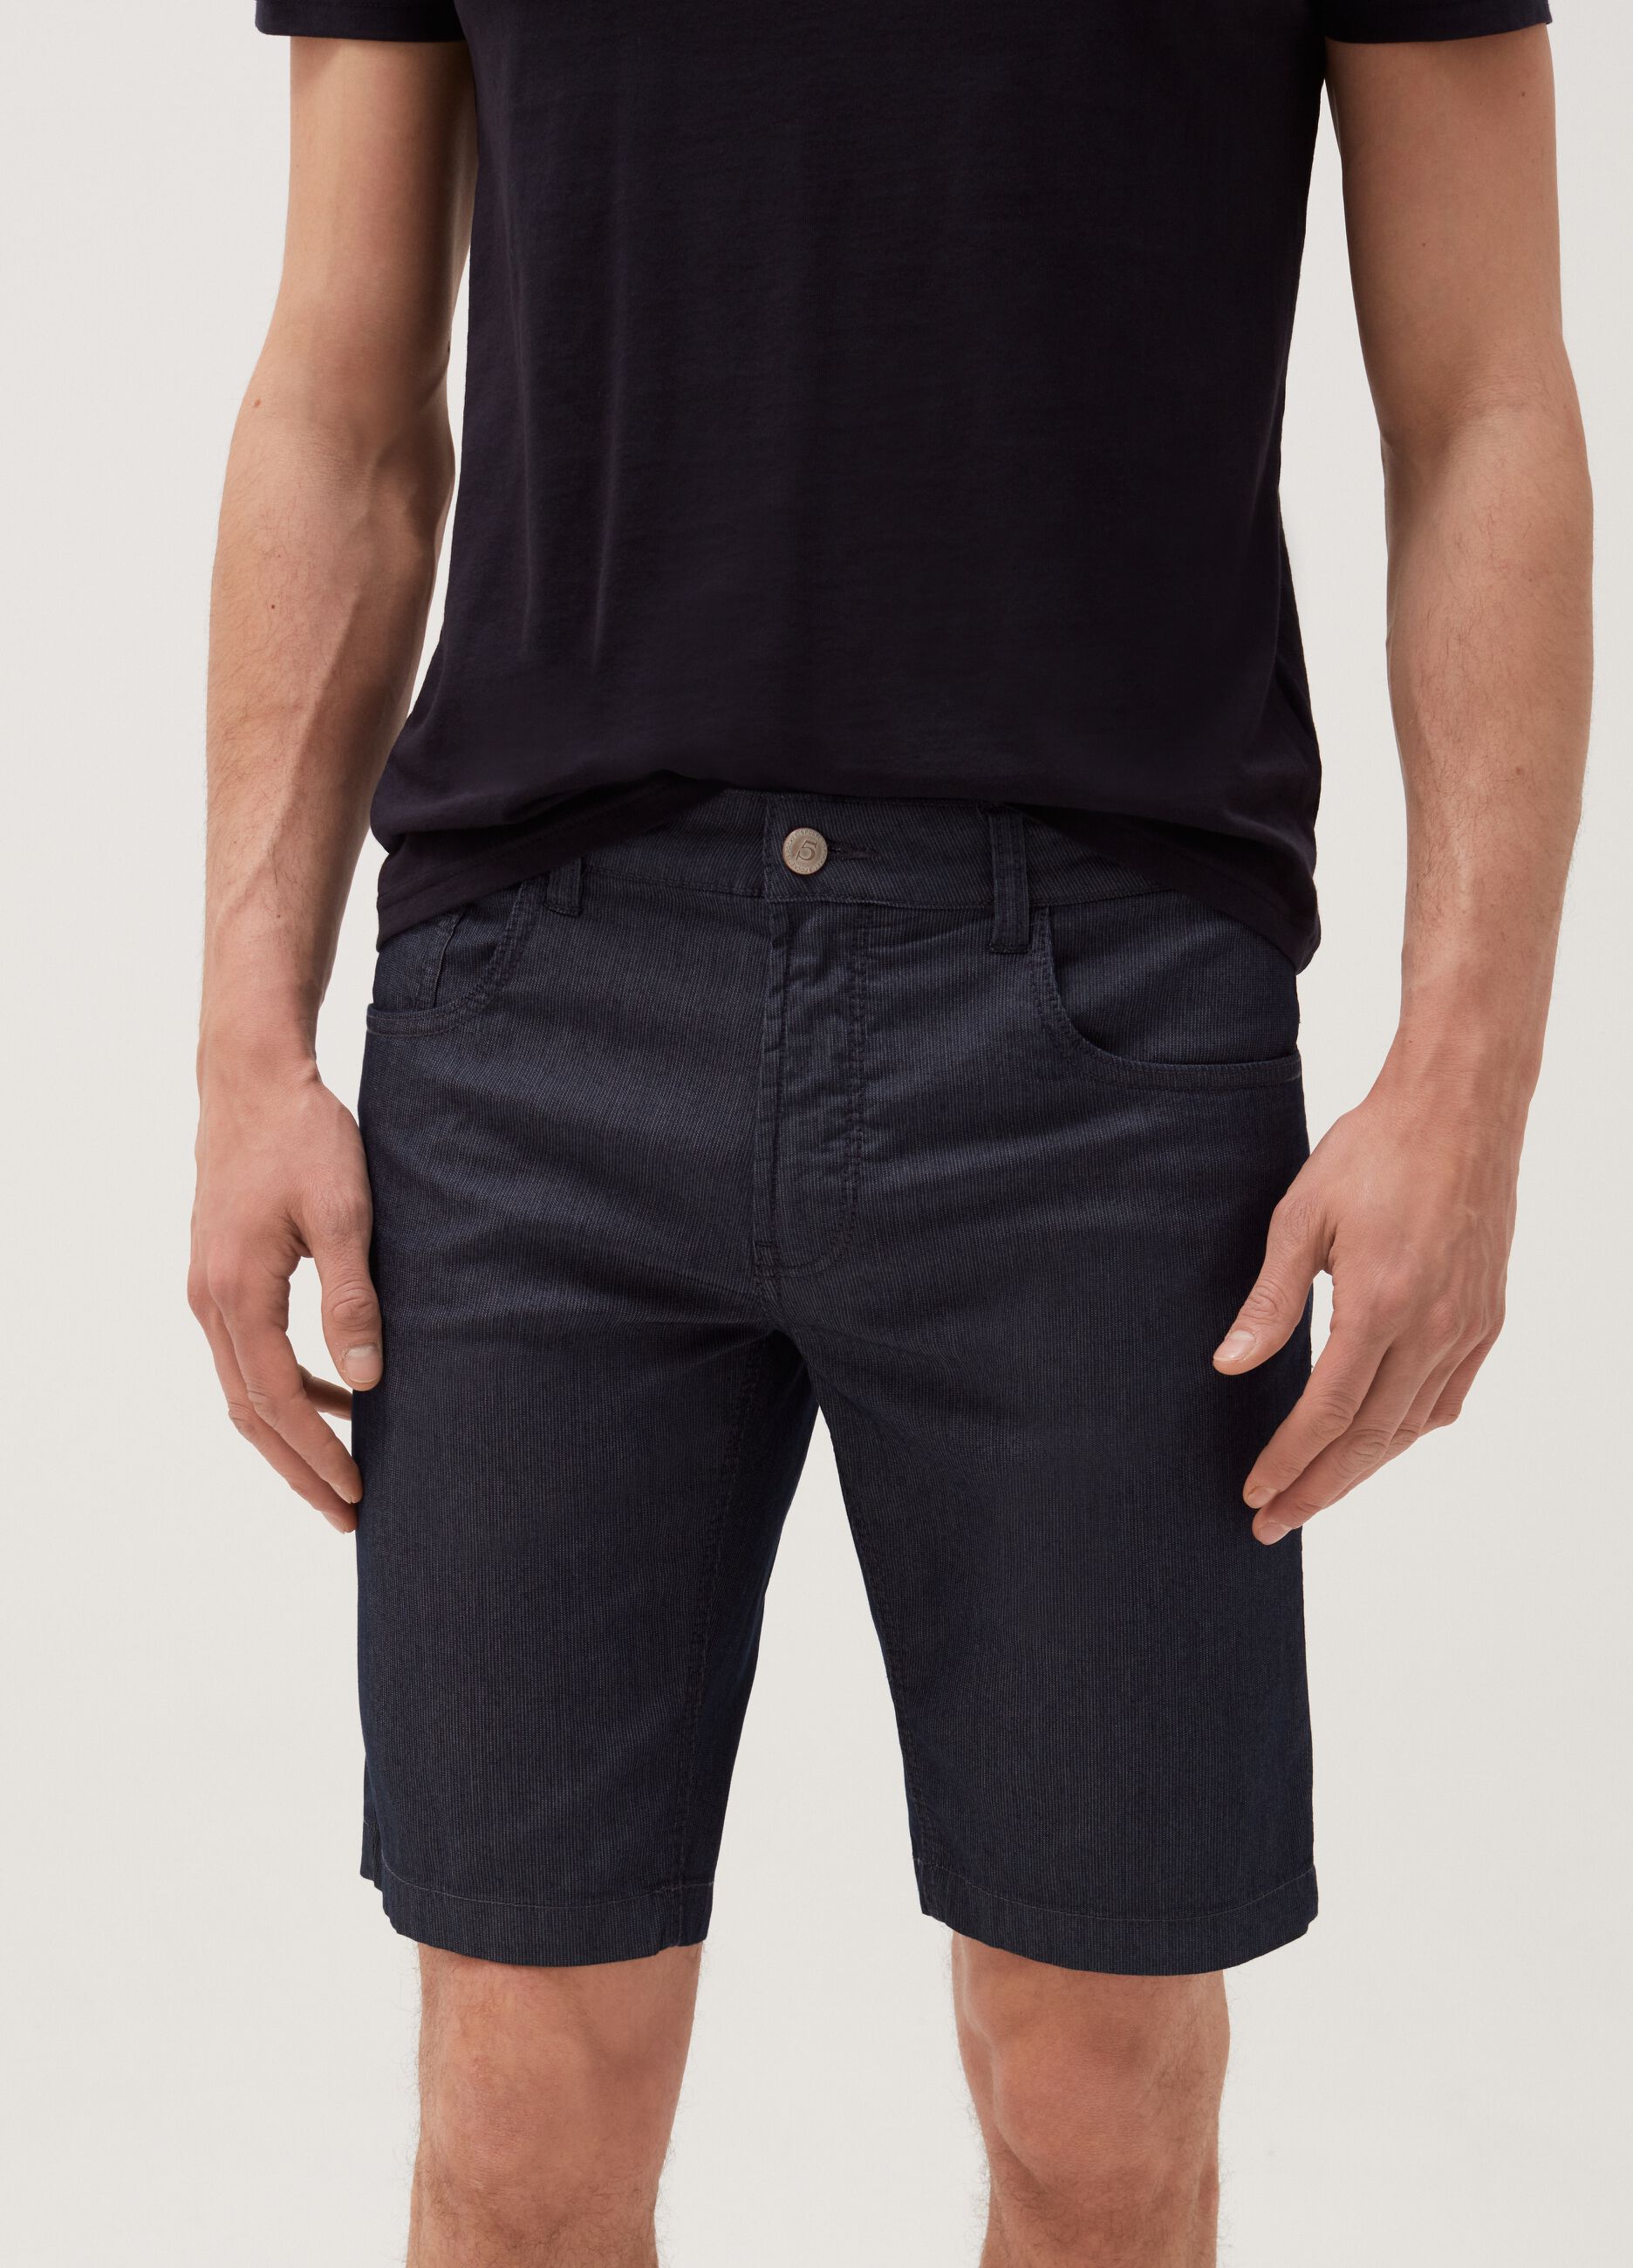 Five-pocket striped Bermuda shorts